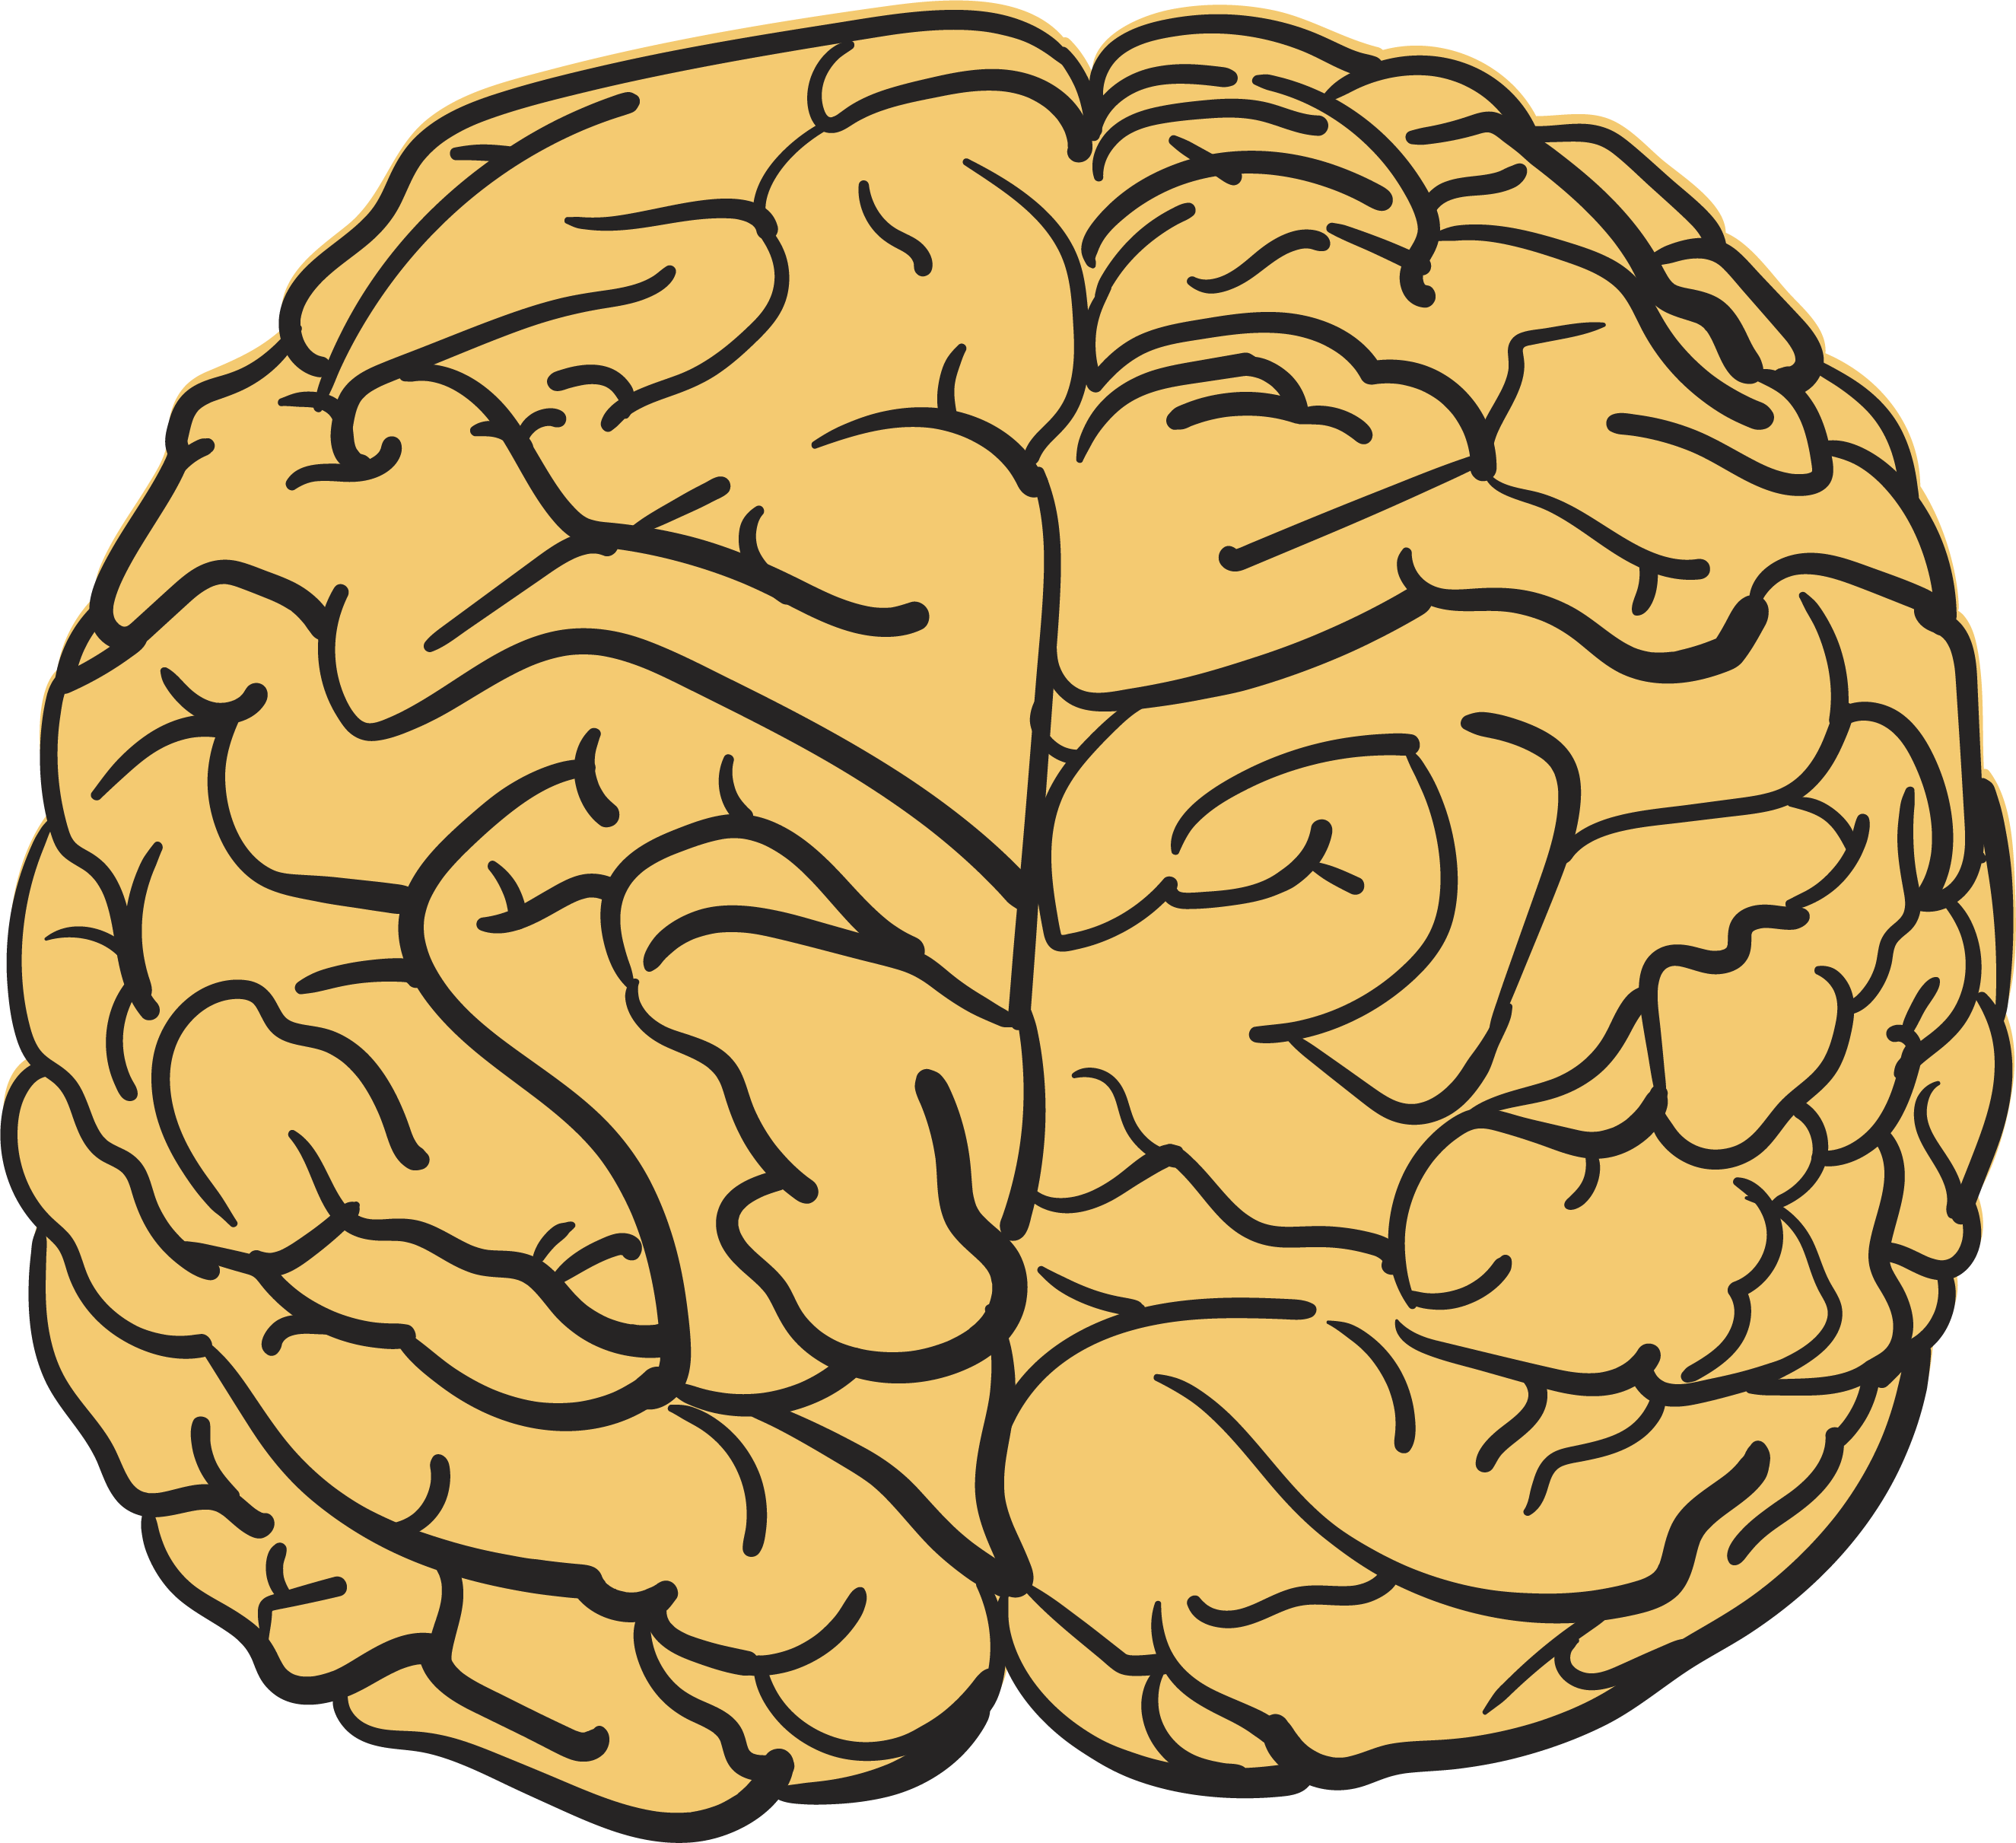 Мозг картинка. Мозг рисунок. Мозг нарисованный. Мозг вектор.